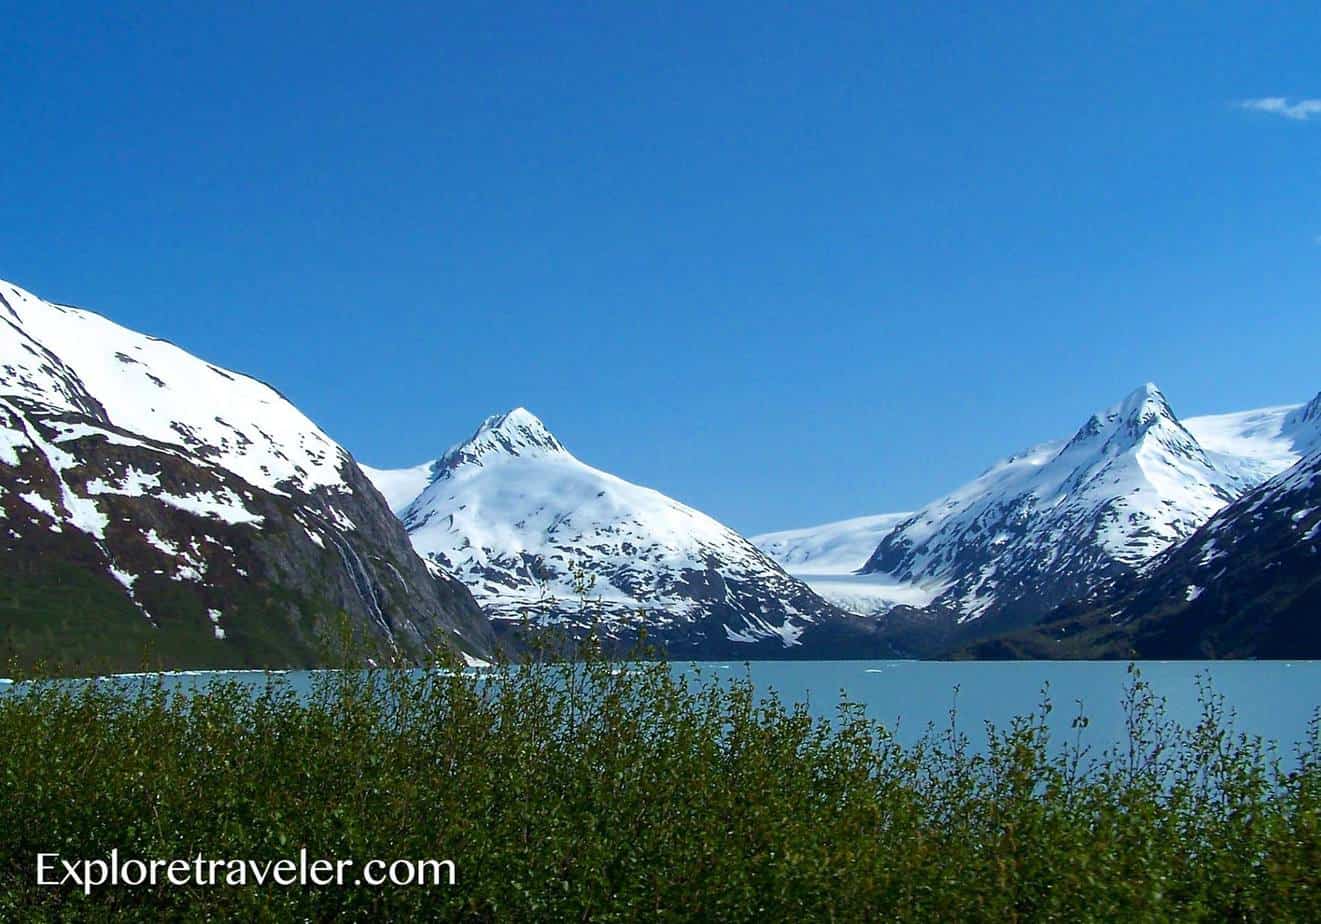  Alaska Marine Highway - Whittier Alaska Gateway to the glacier and wildlife filled Prince William Sound